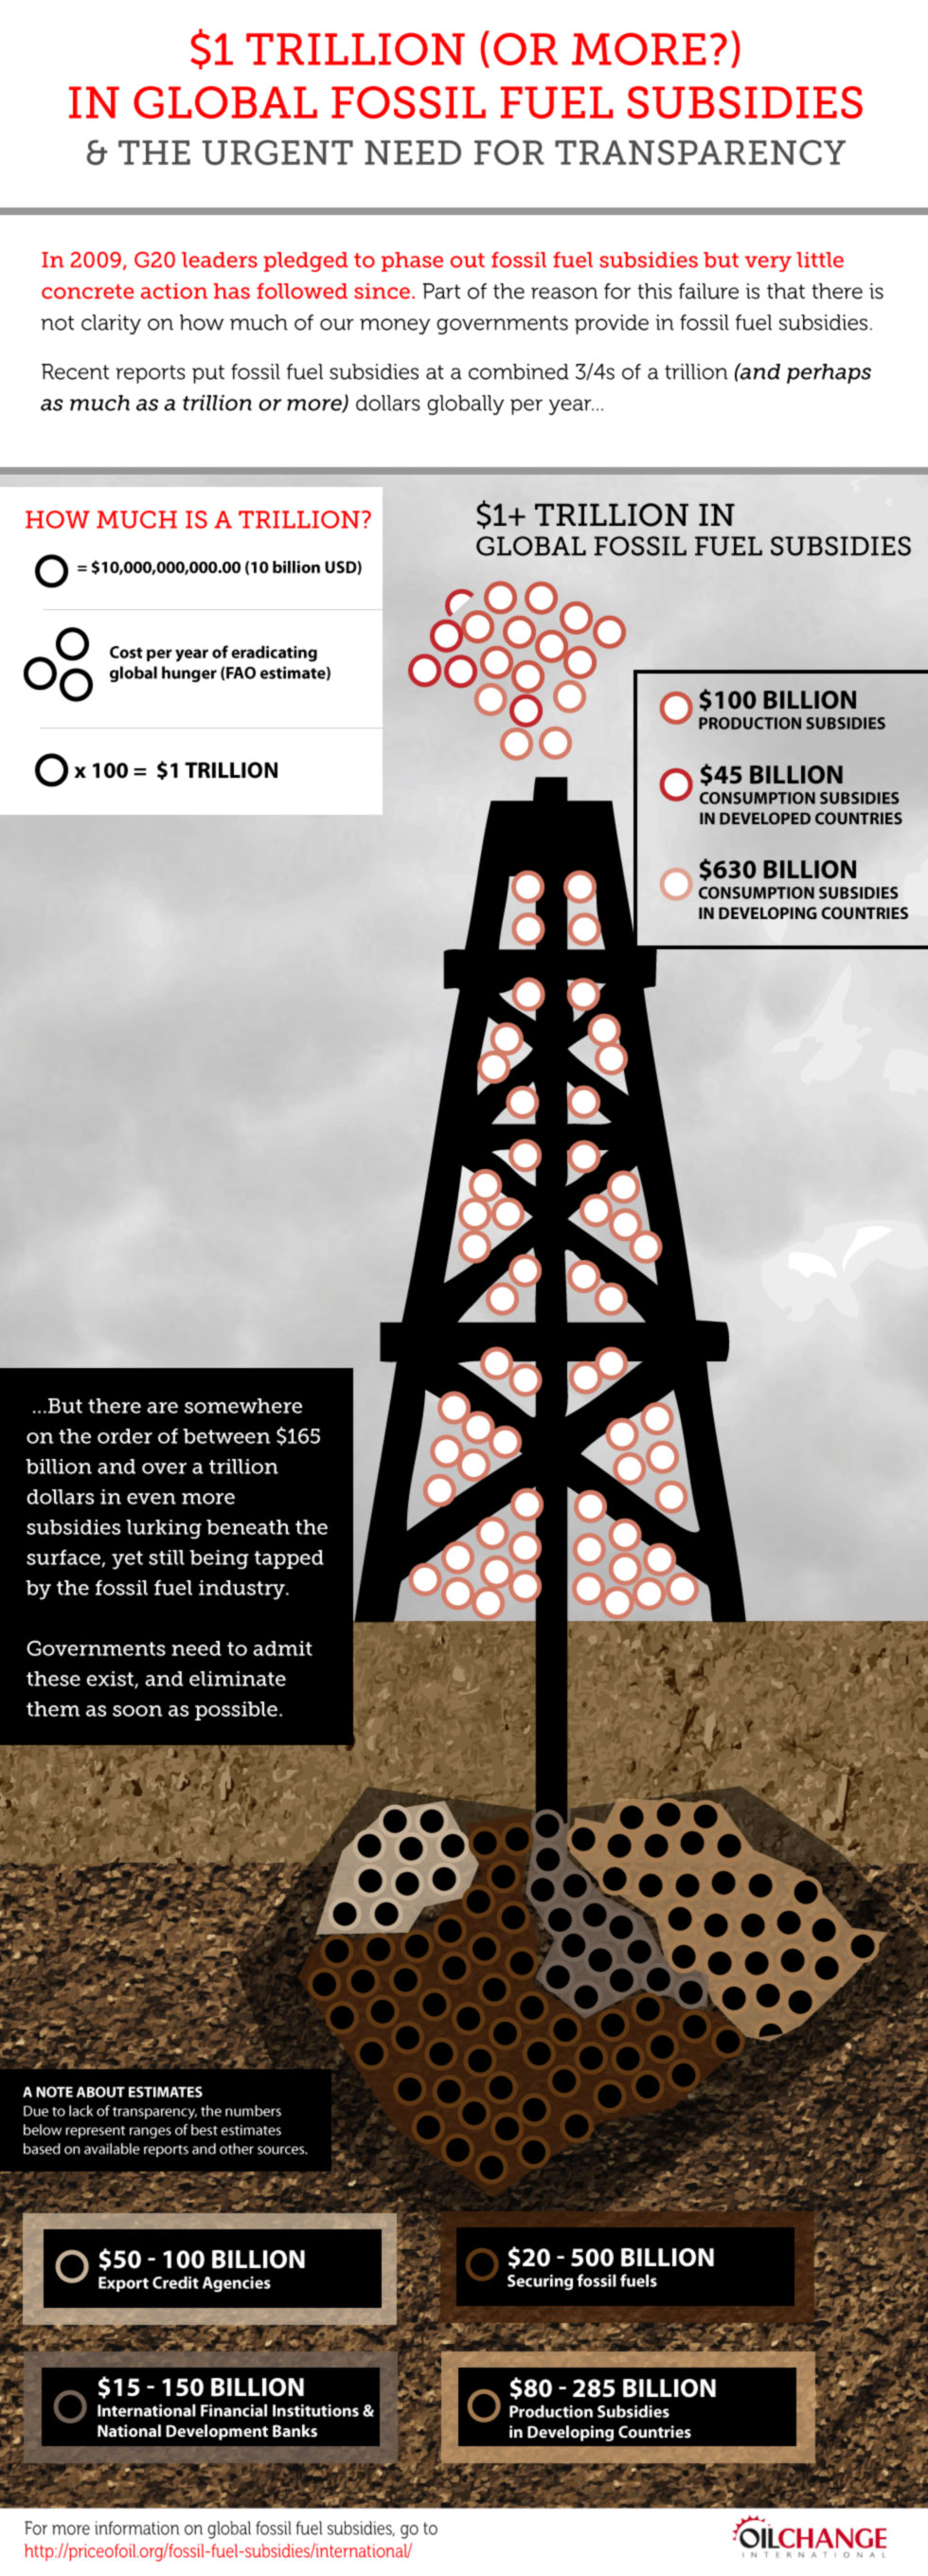 Oil Change International worldwide oil subsidies infographic